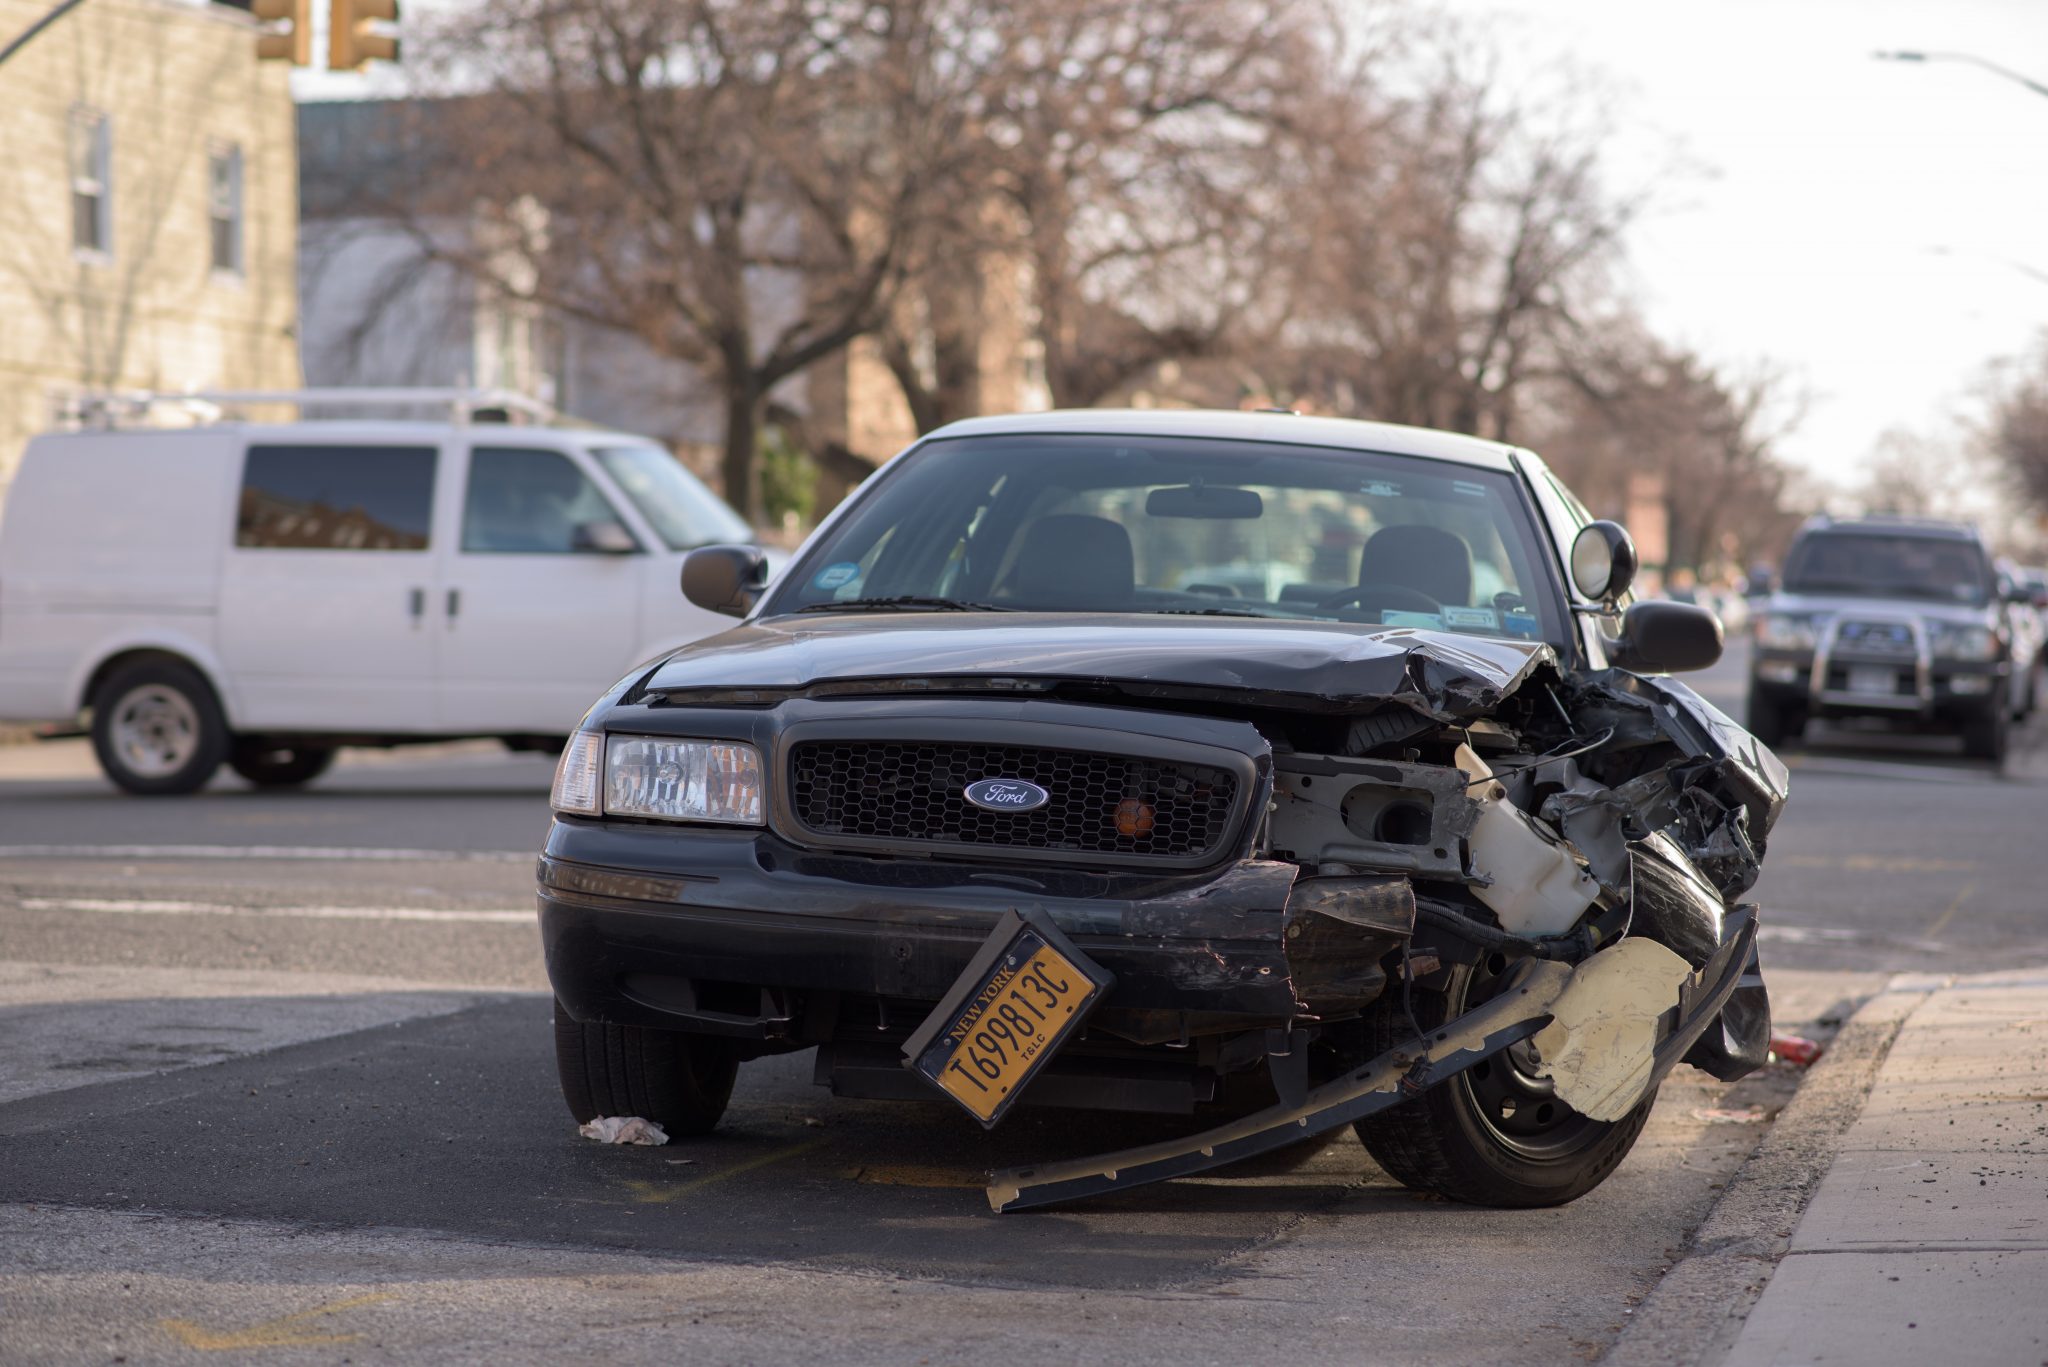 Car Safety Cash for scrap car Car Accident Traffic Accident Road Risks Car Dent Company Vehicle Car Accident auto insurance Car Crash